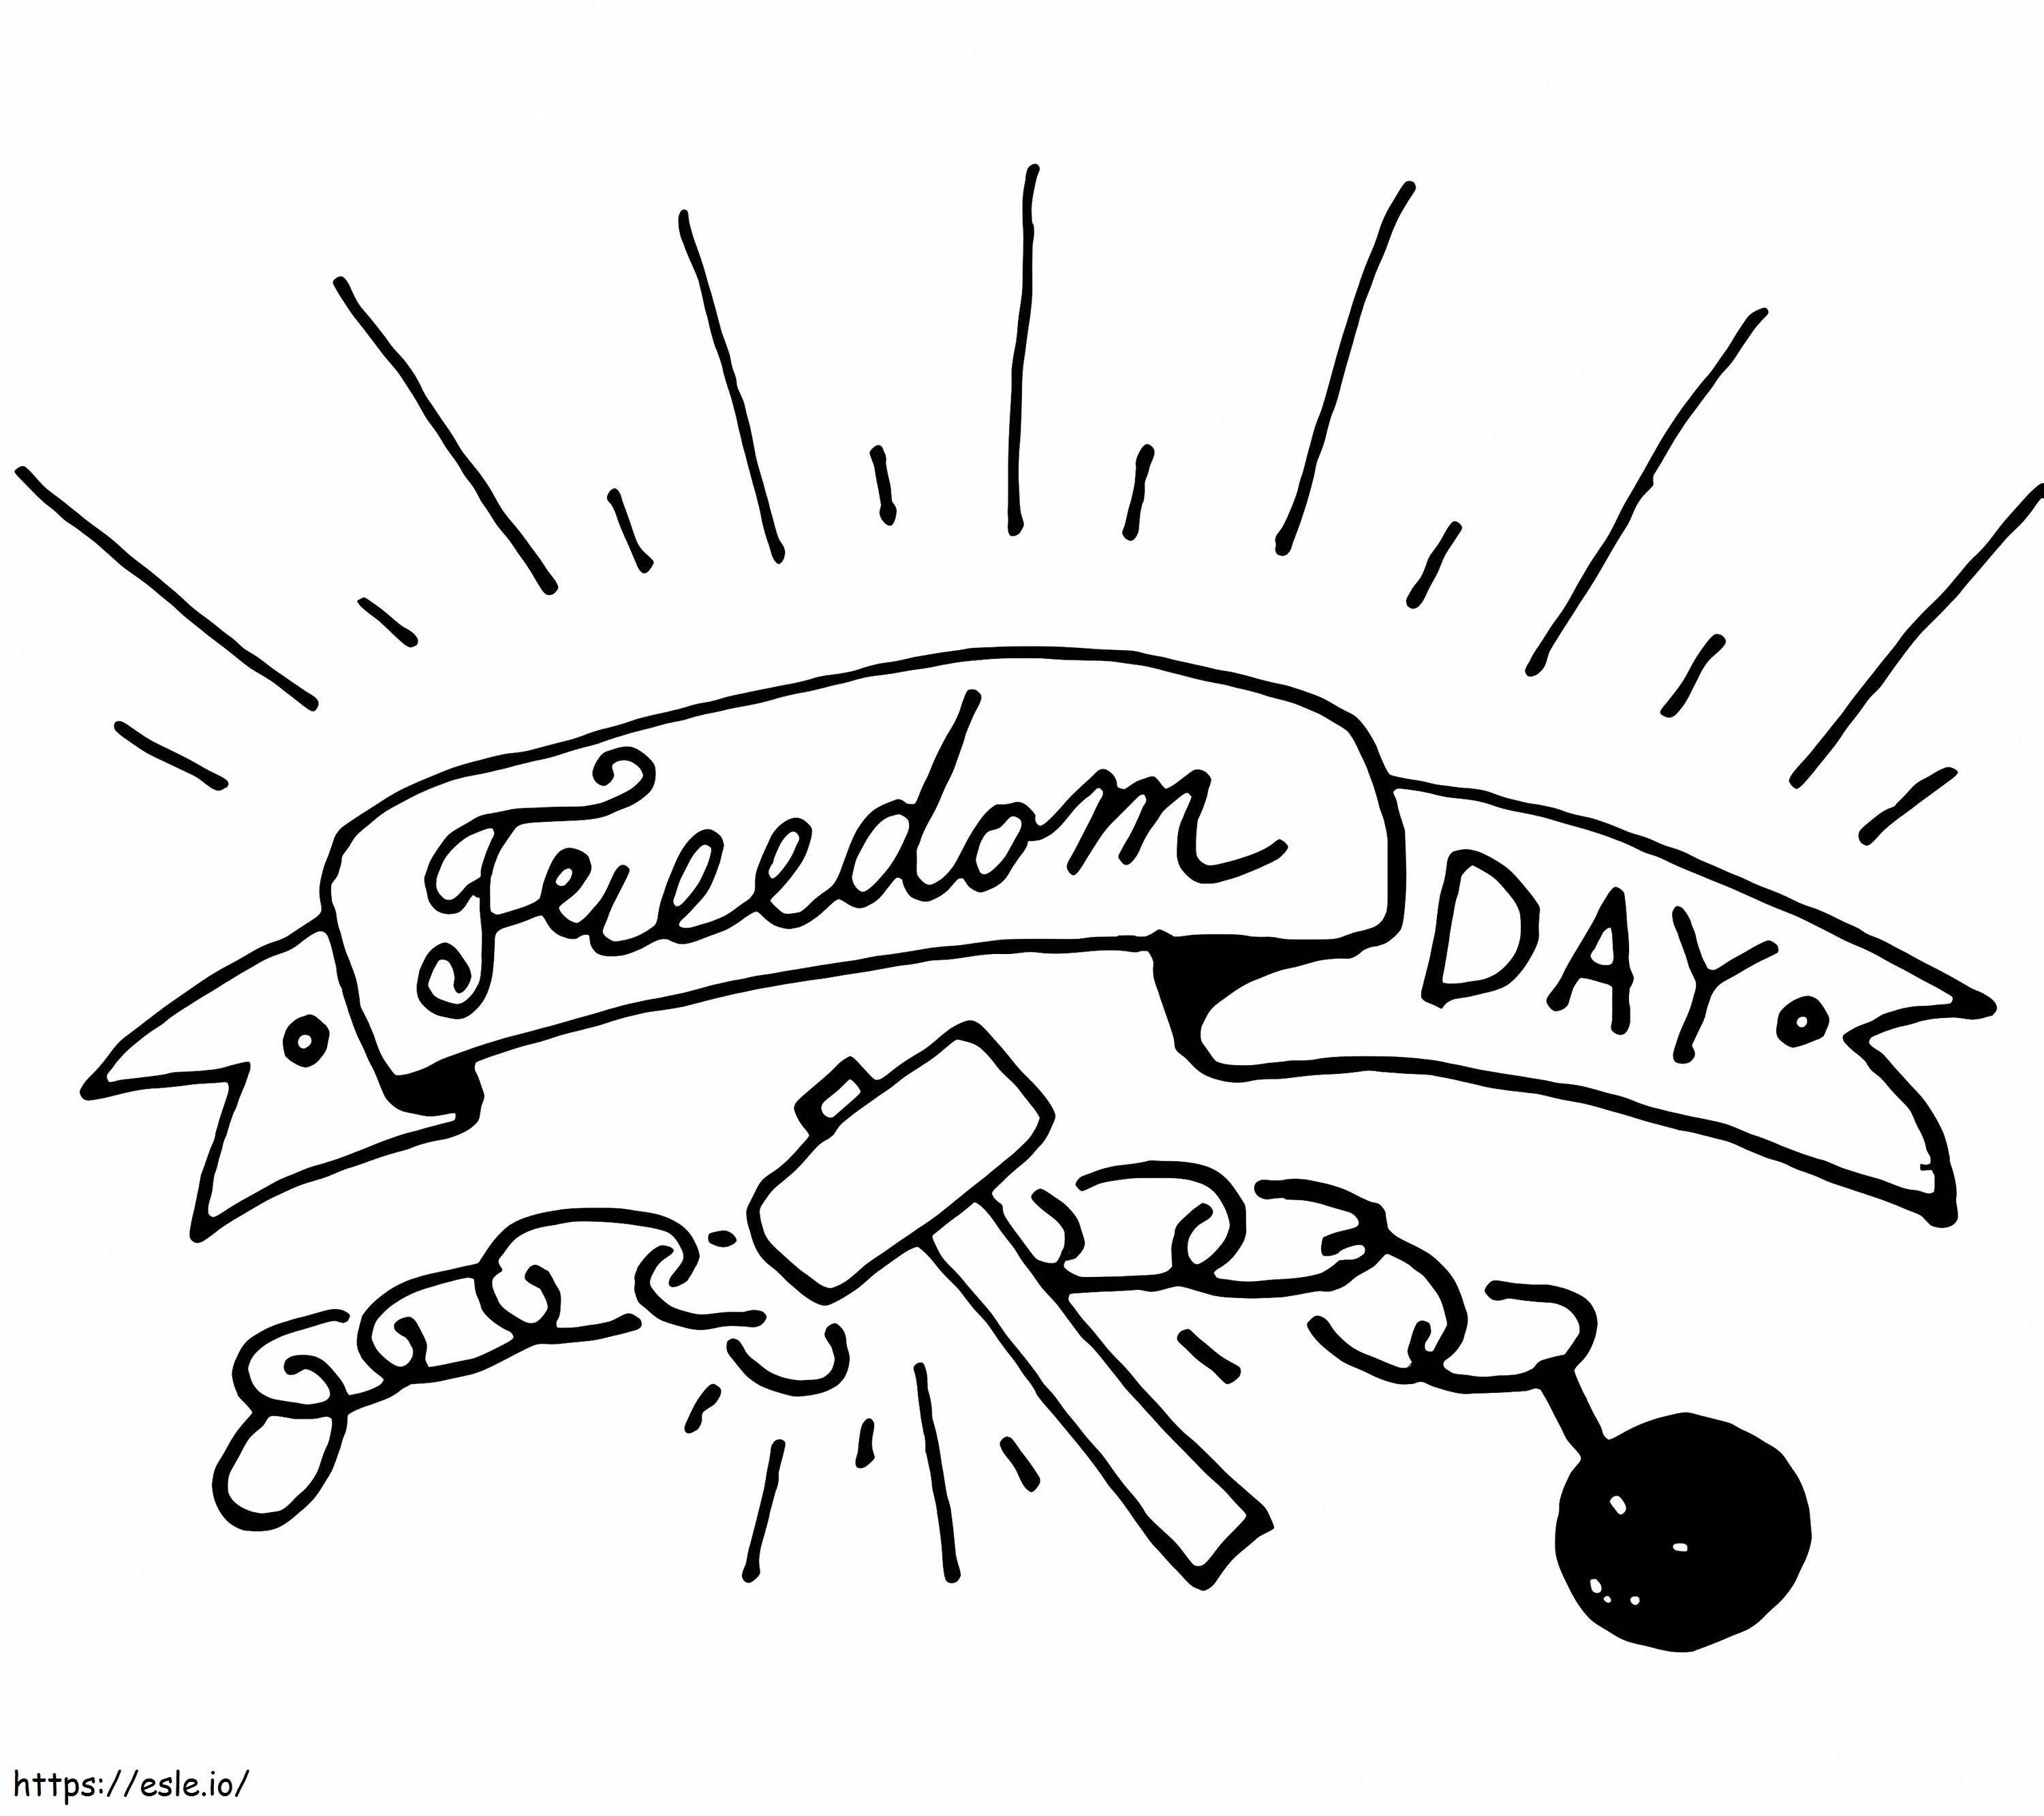 Dia da Liberdade de Junho para colorir